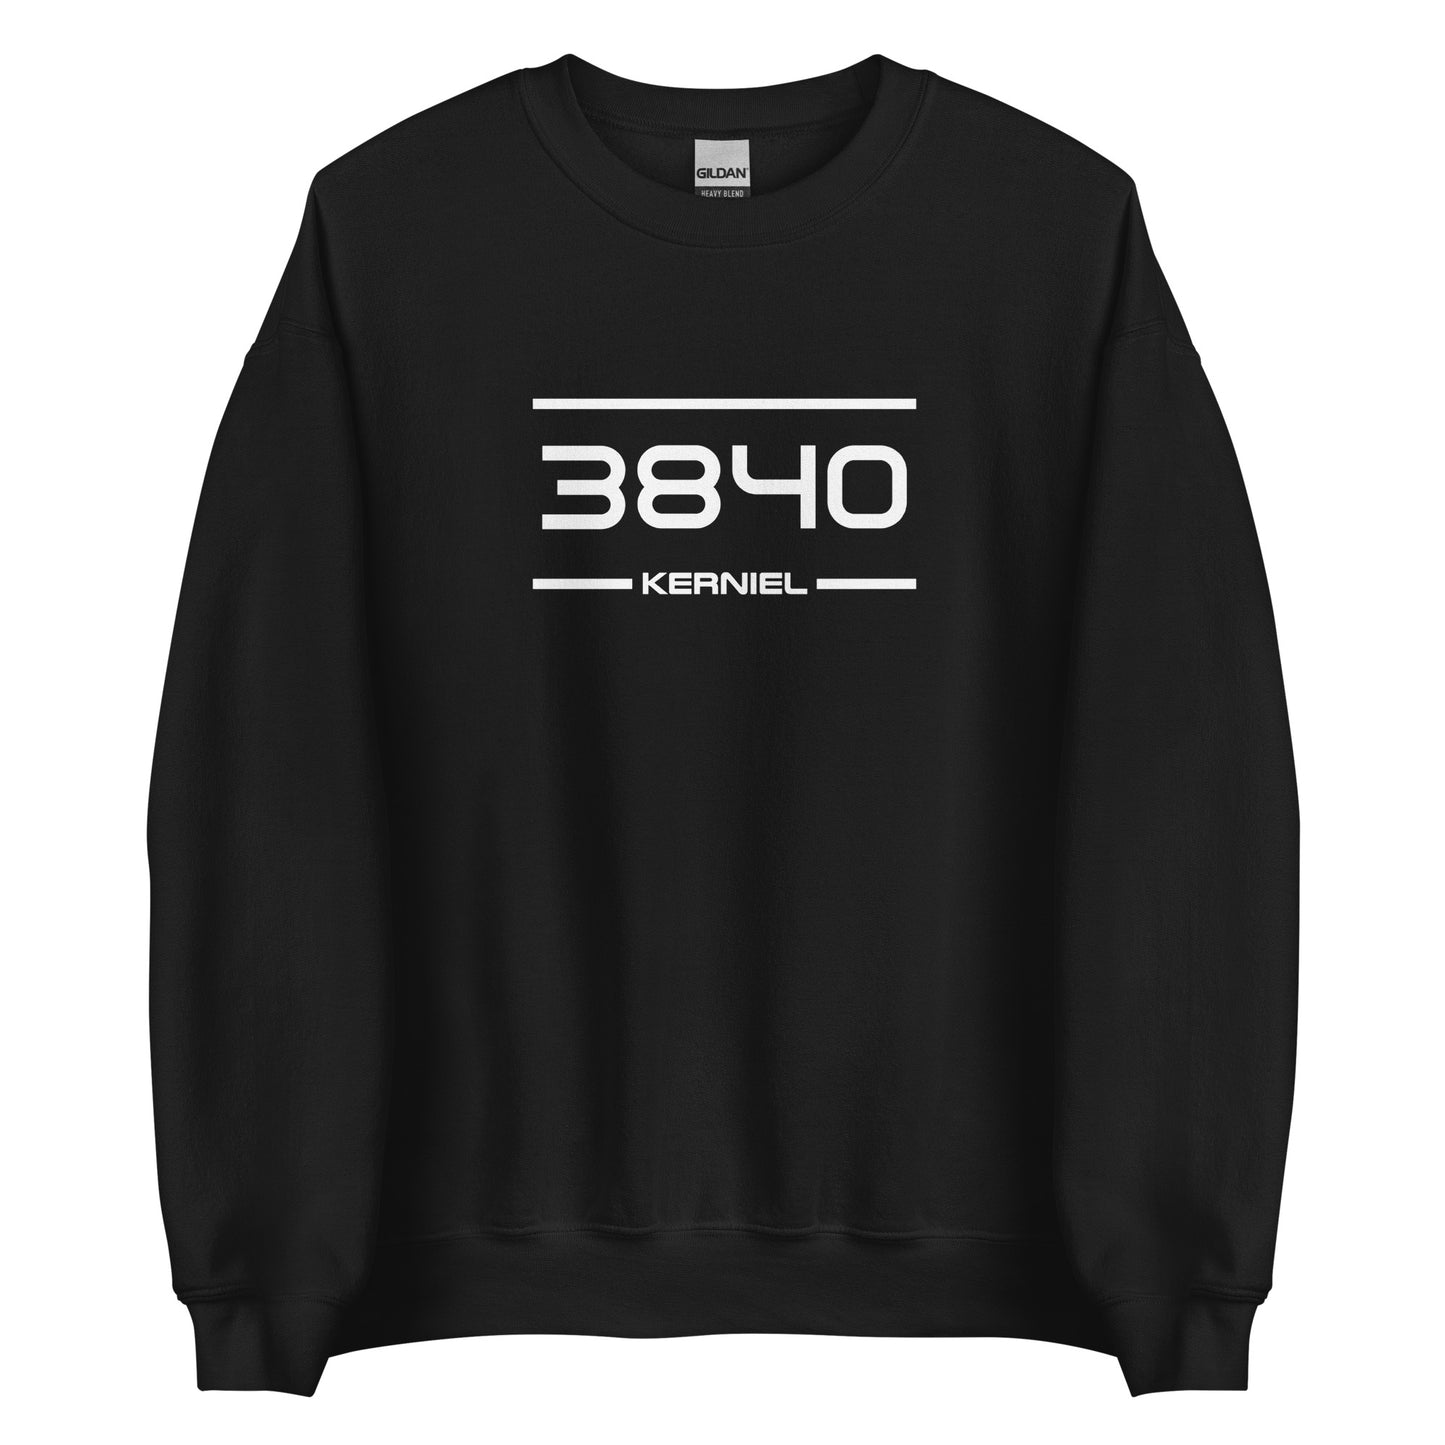 Sweater - 3840 - Kerniel (M/V)